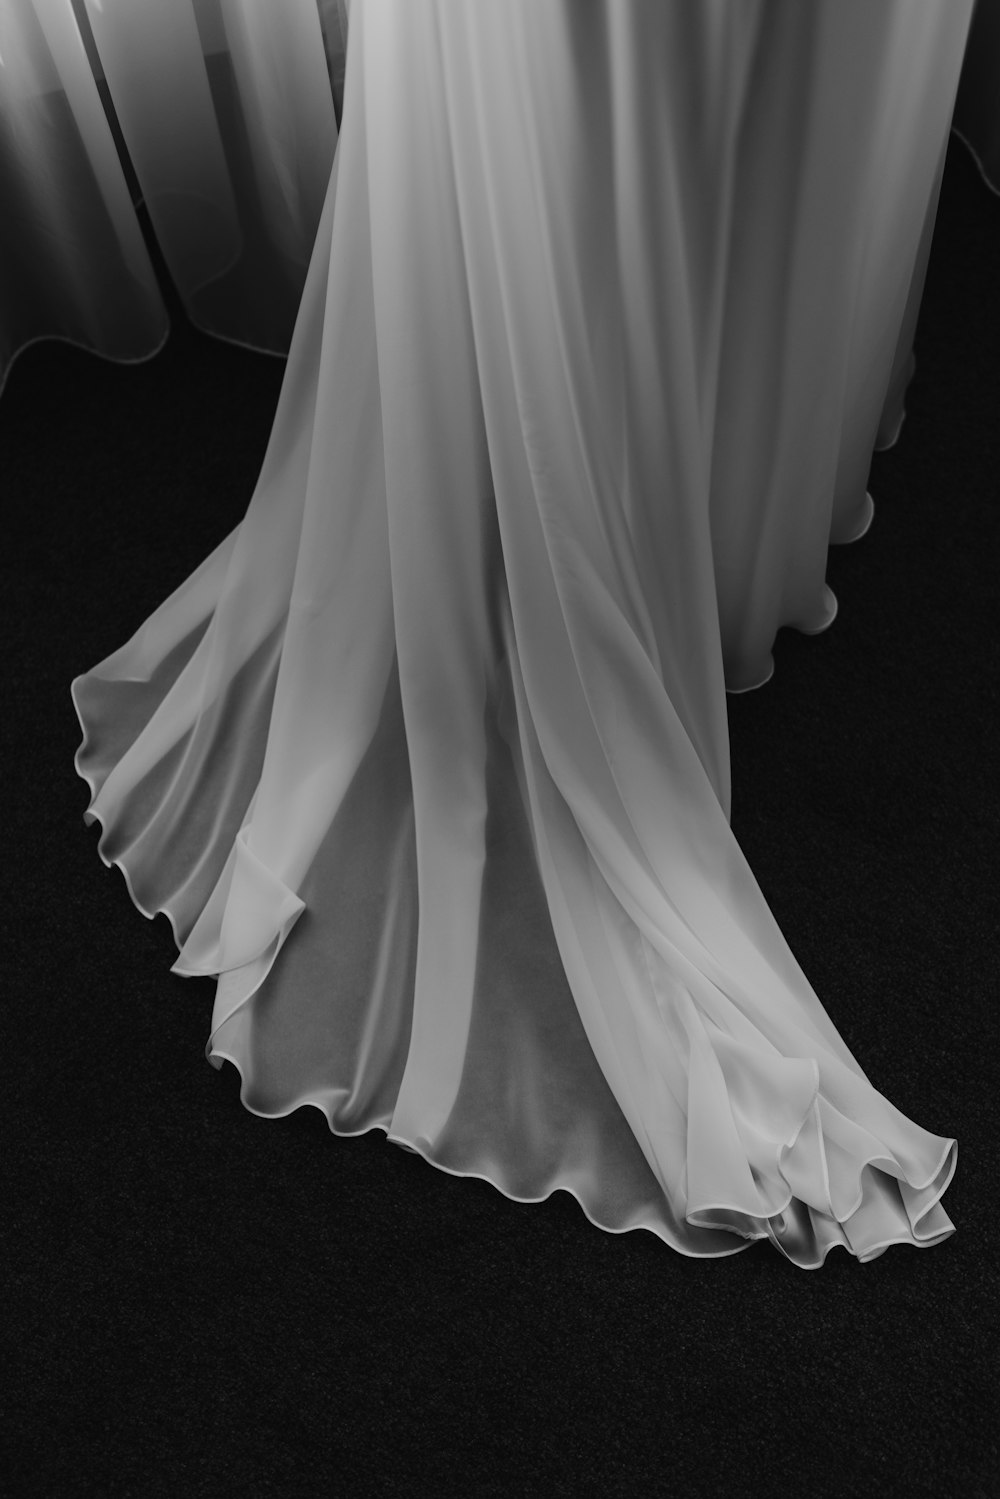 a white dress on a black surface